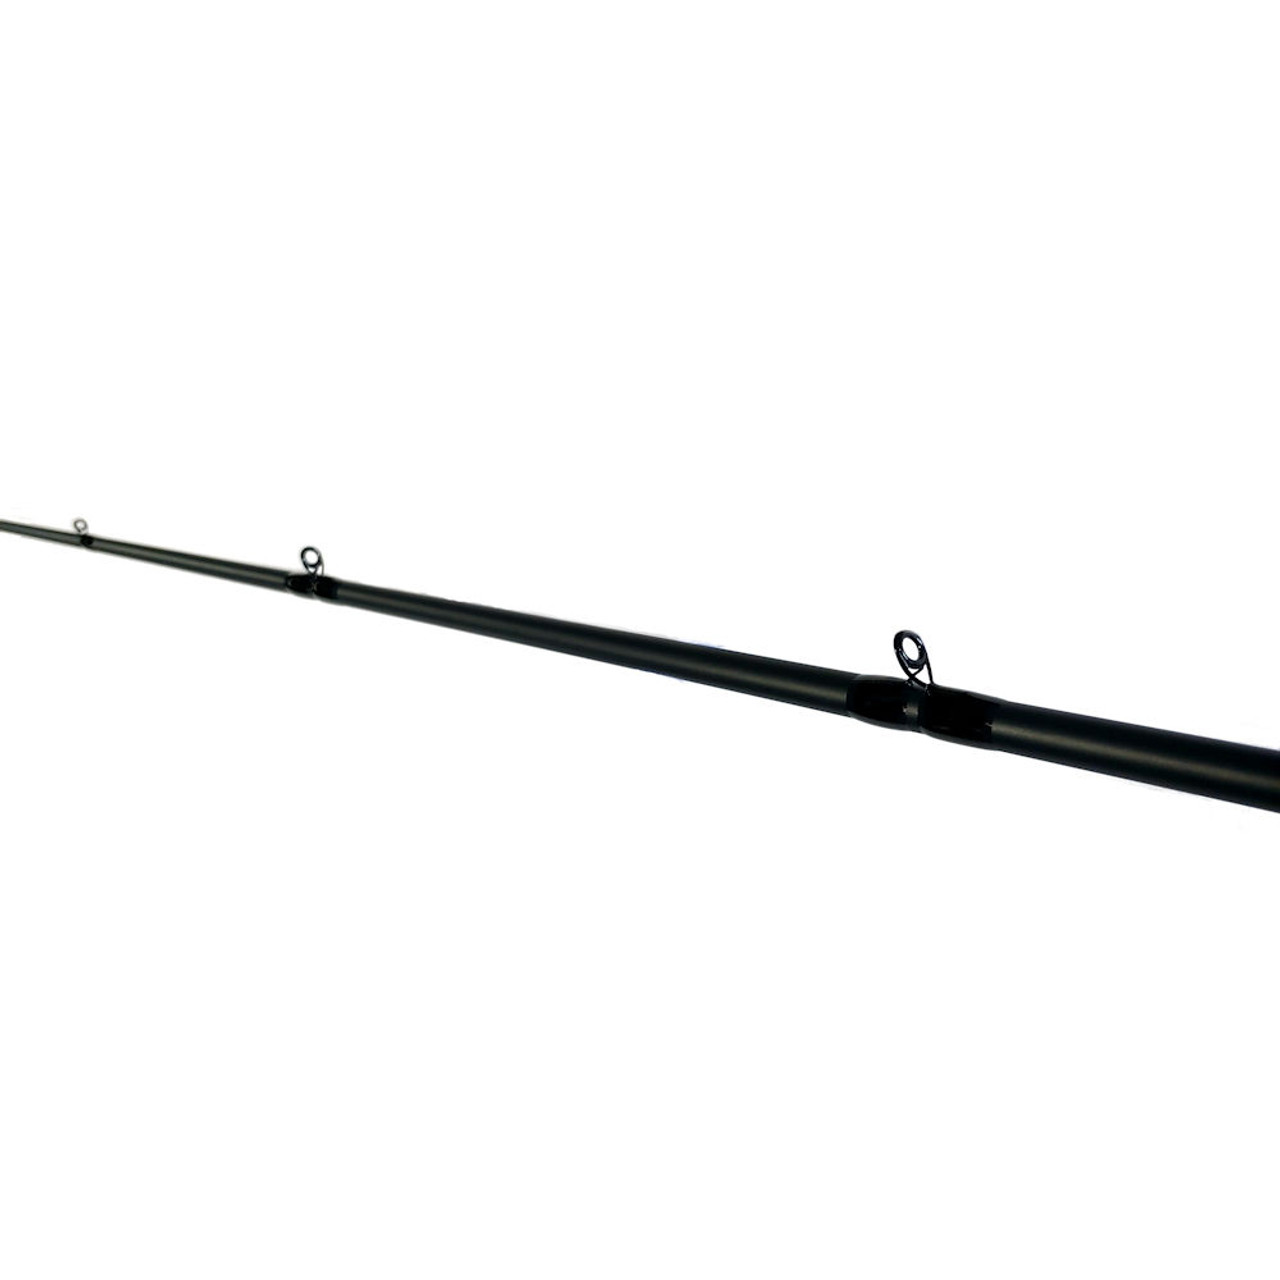 6'3 Medium Casting Rod  Impulse Freshwater Casting Rods